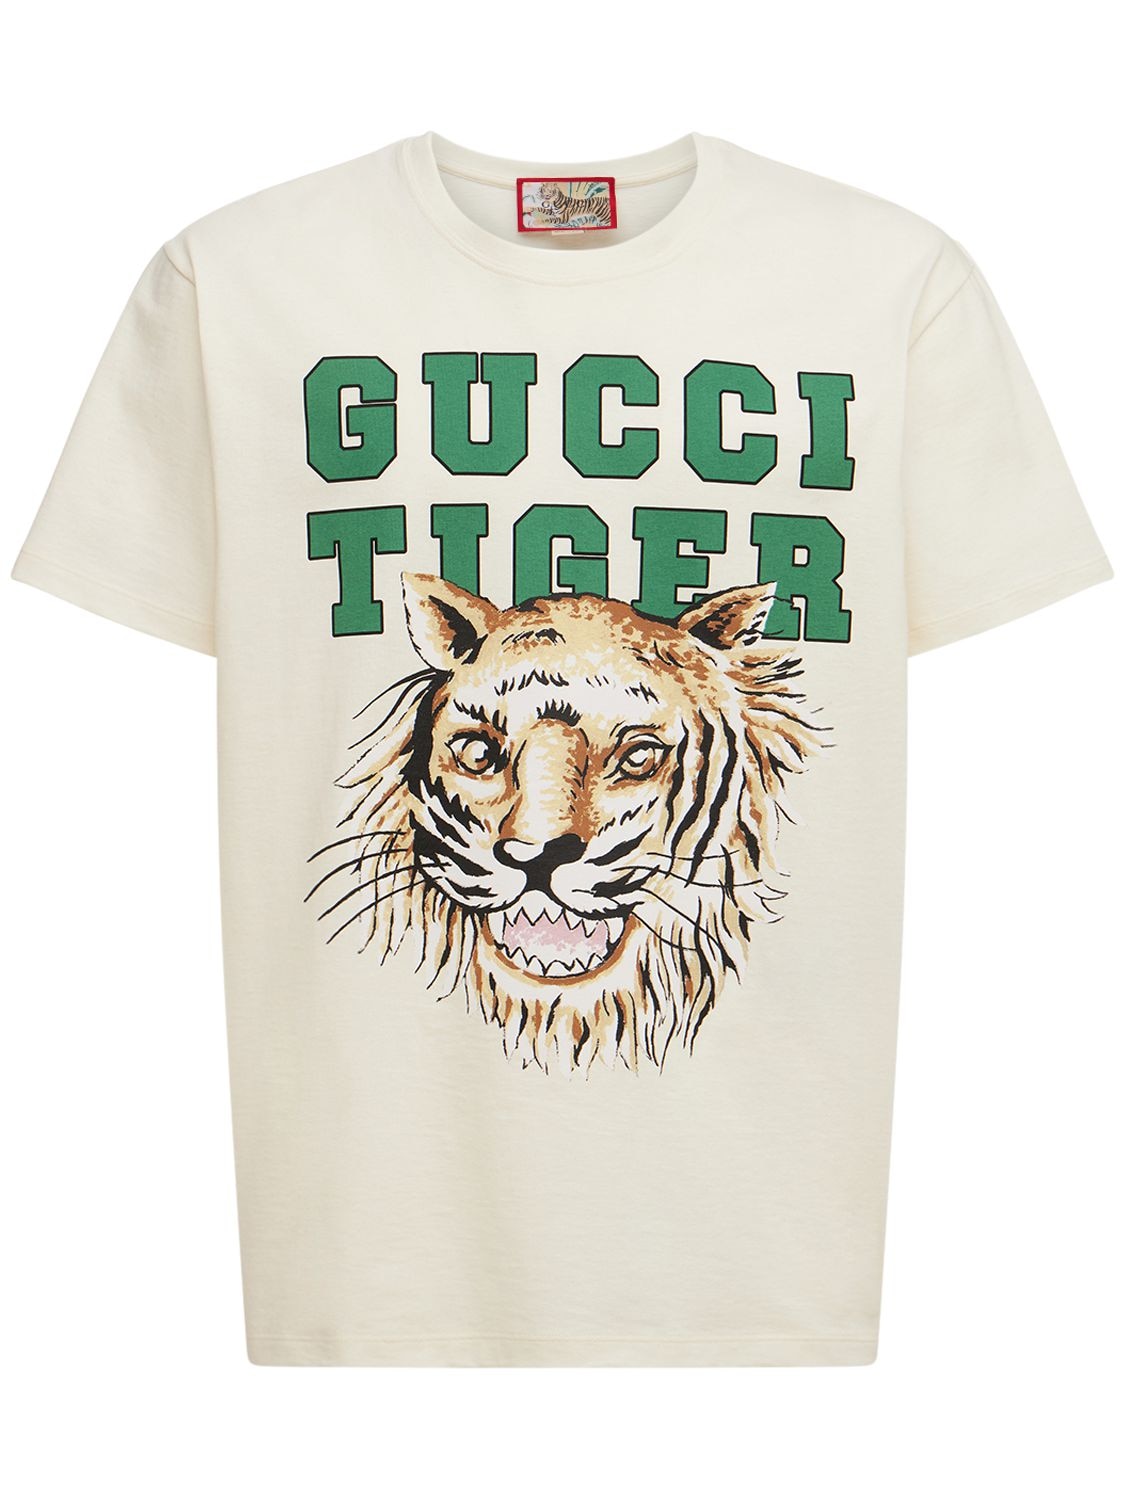 Gucci Tiger Print Cotton T-Shirt メンズ